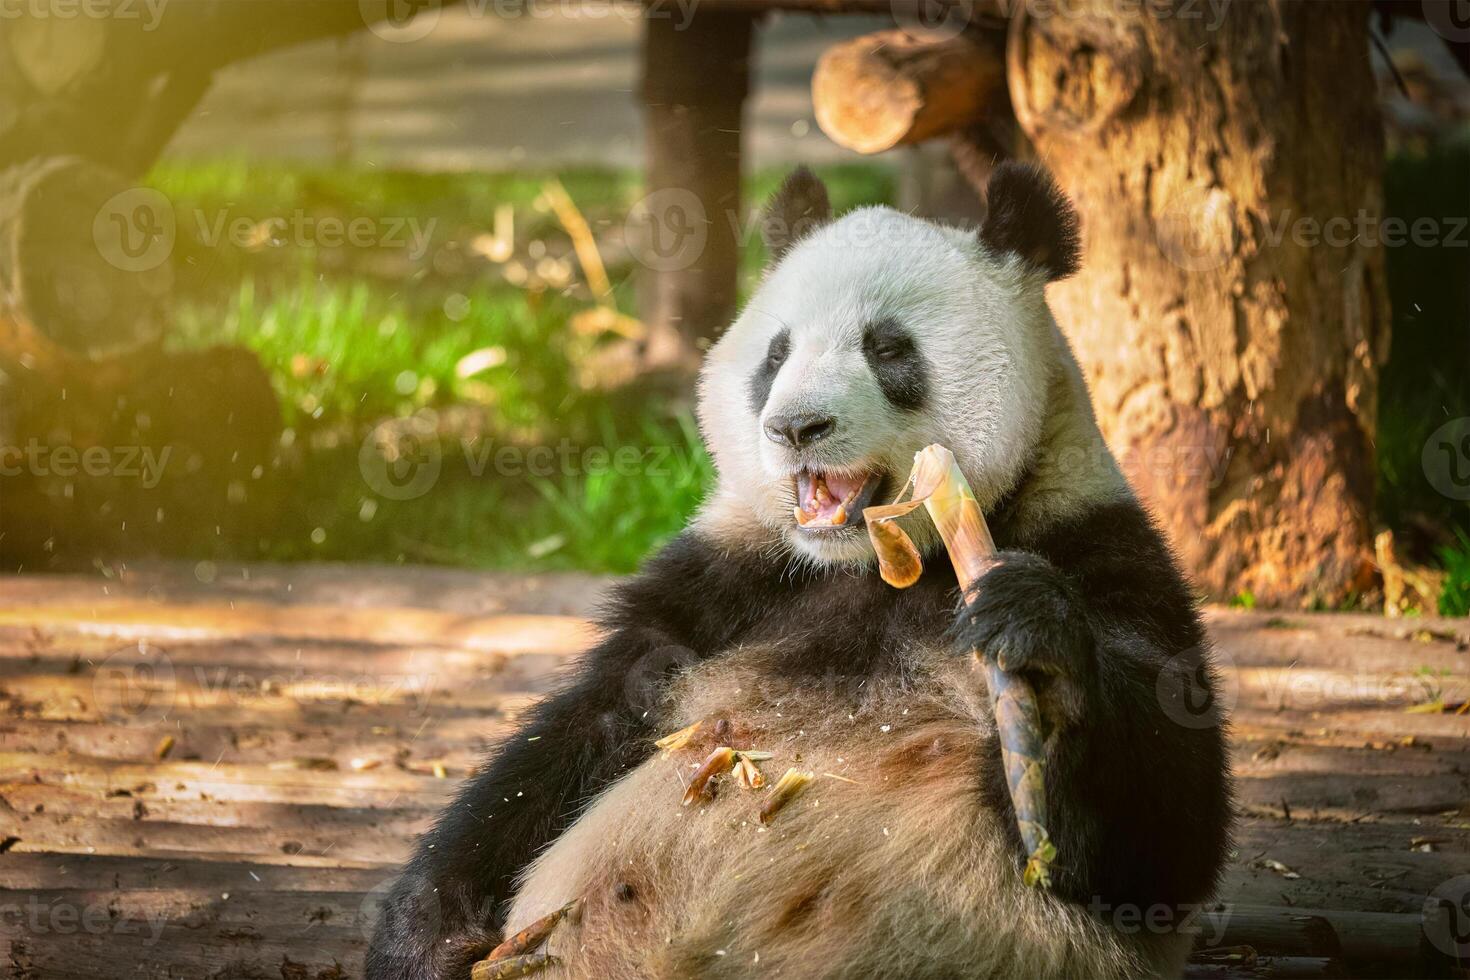 Giant panda bear in China photo